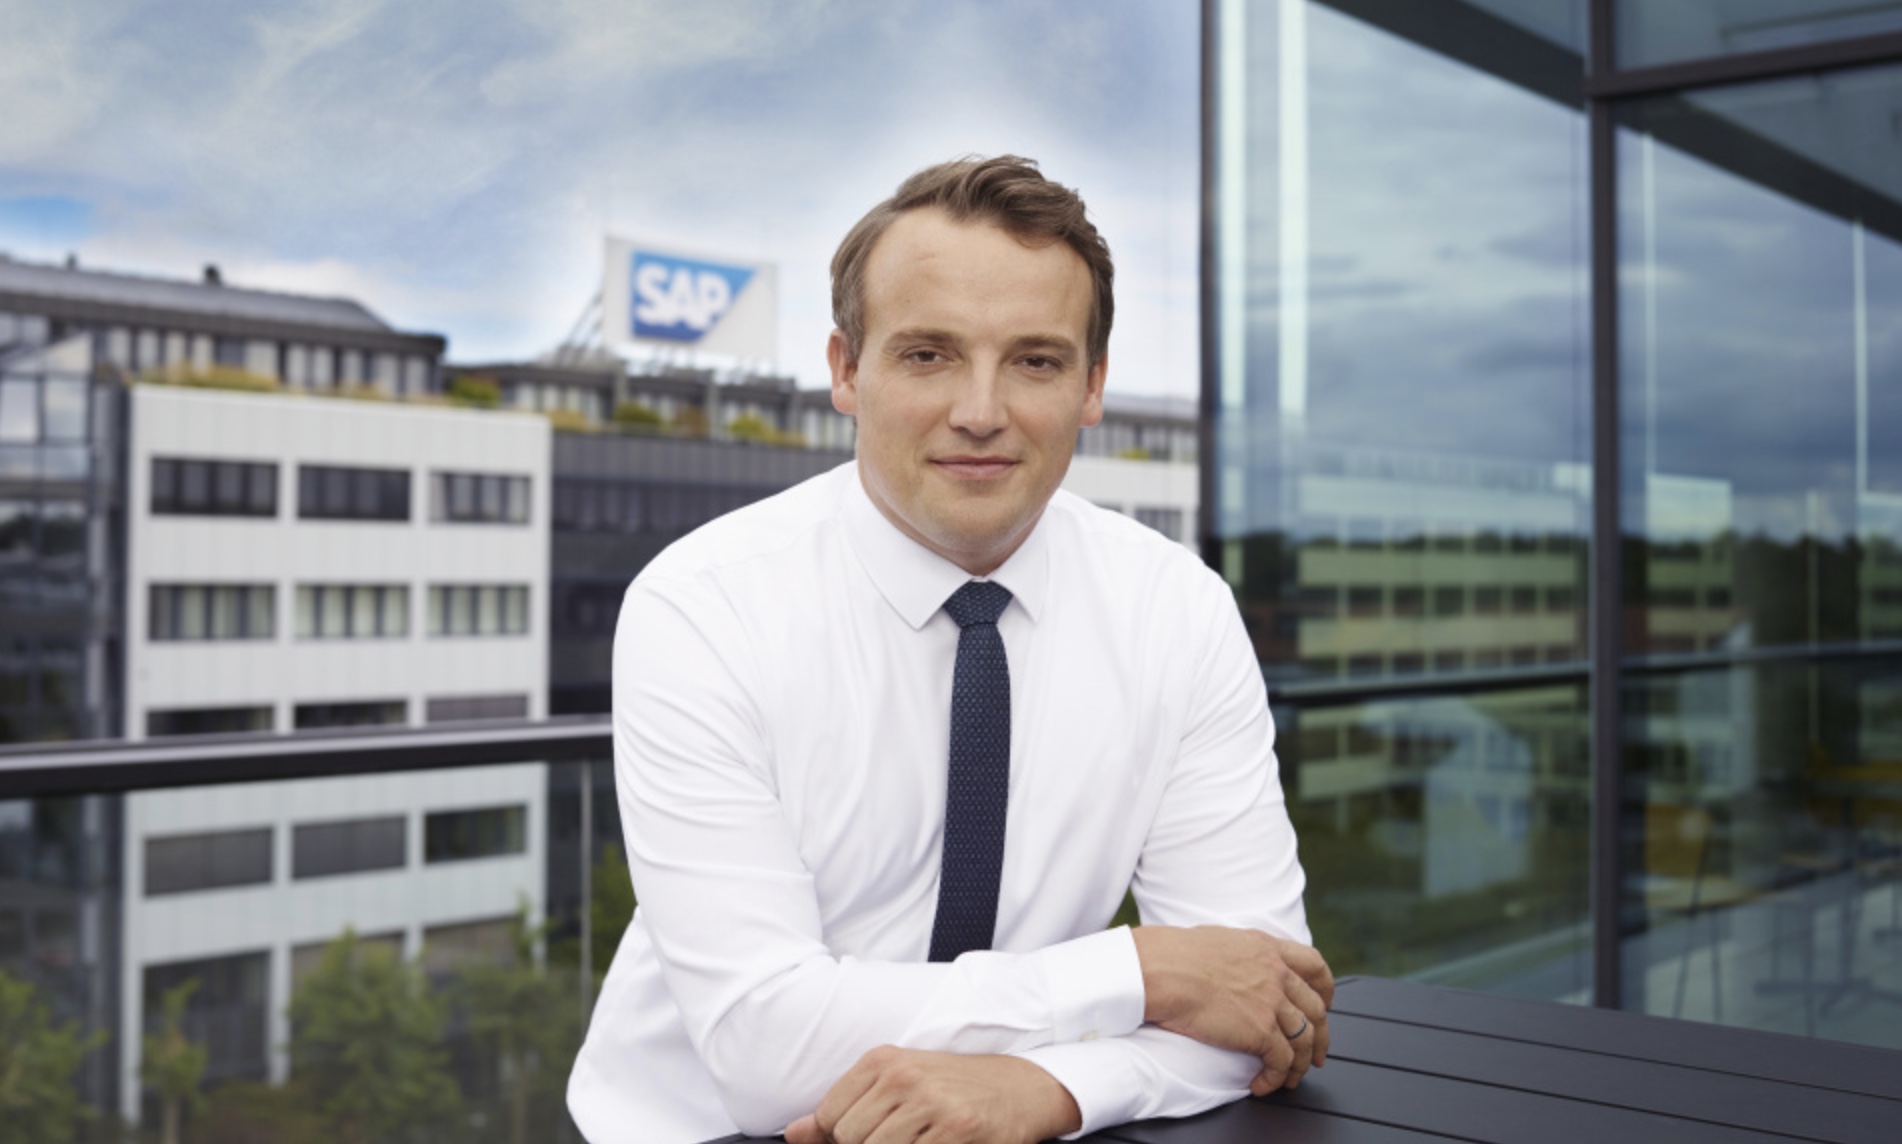 SAP CEO Christian Klein